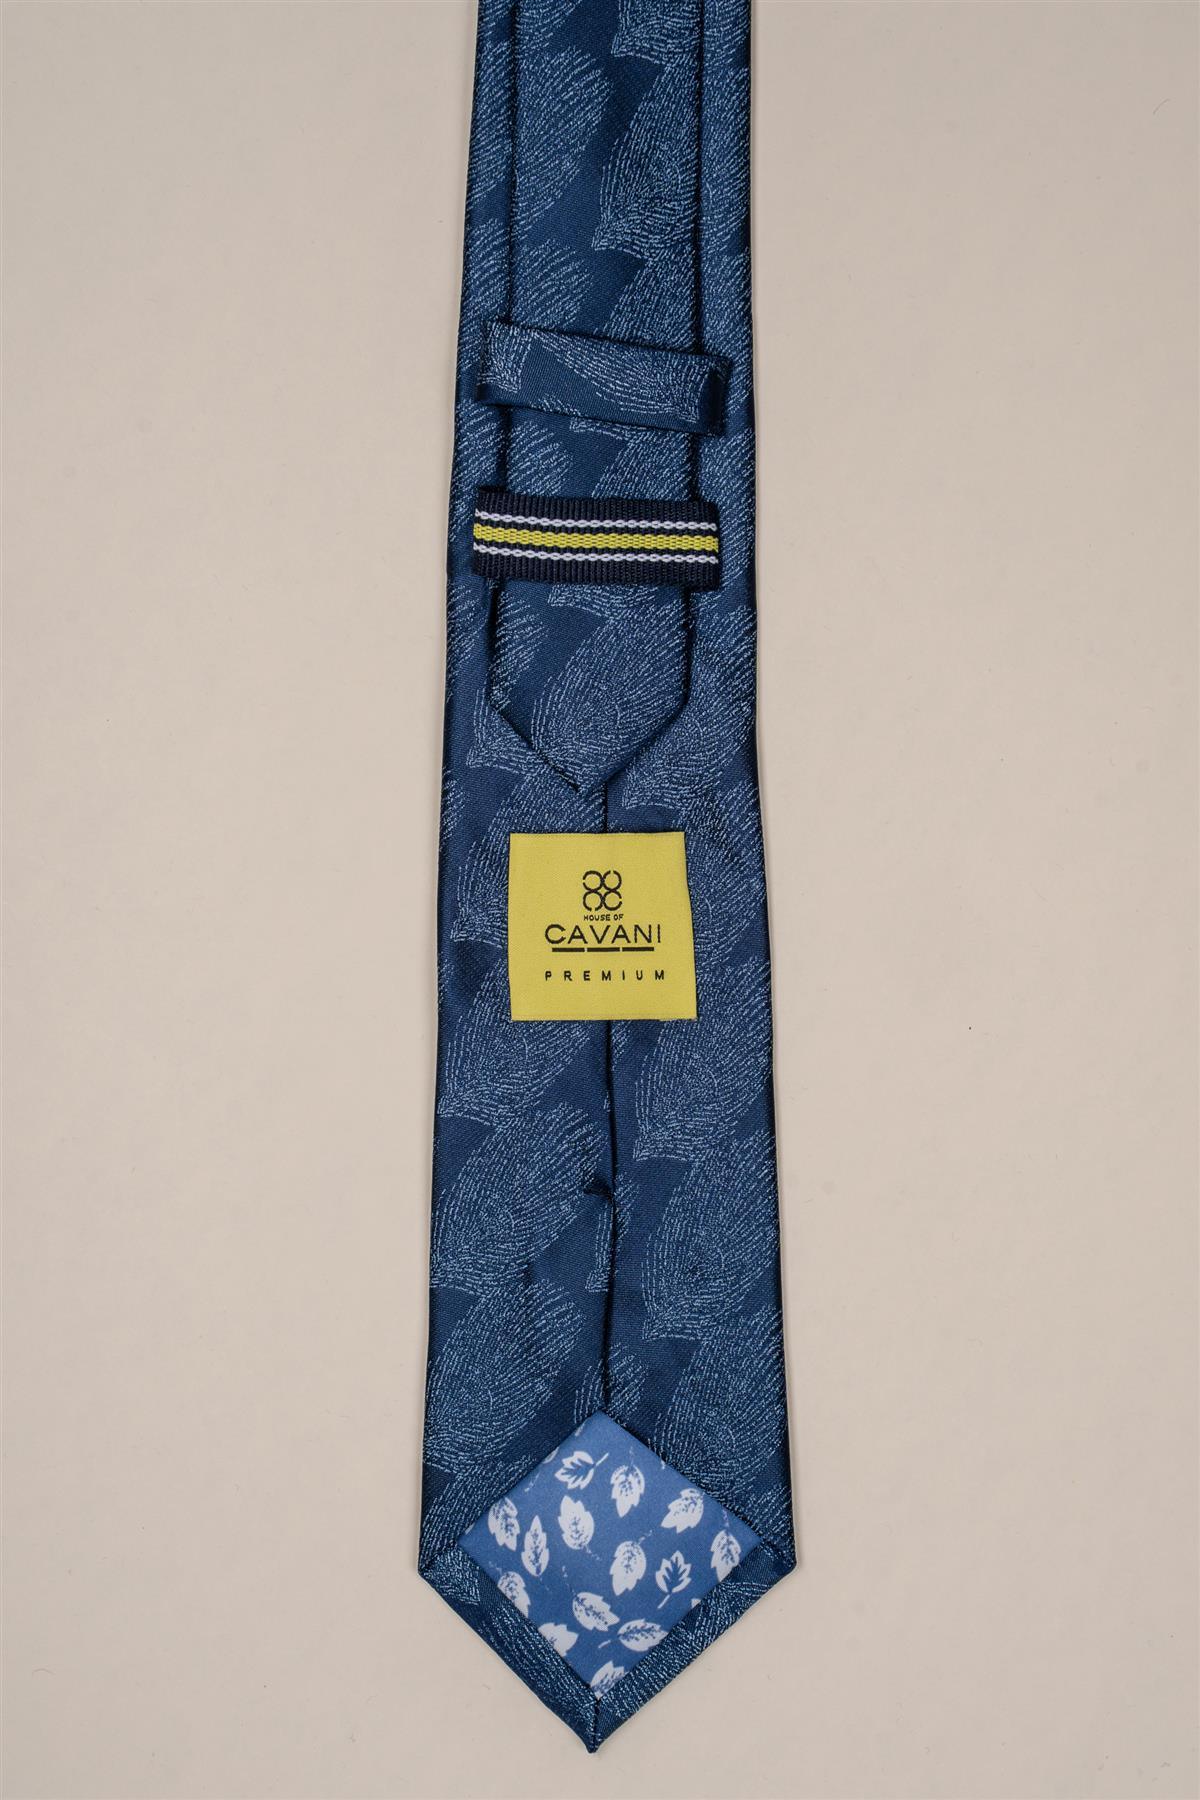 CV806 patterned tie